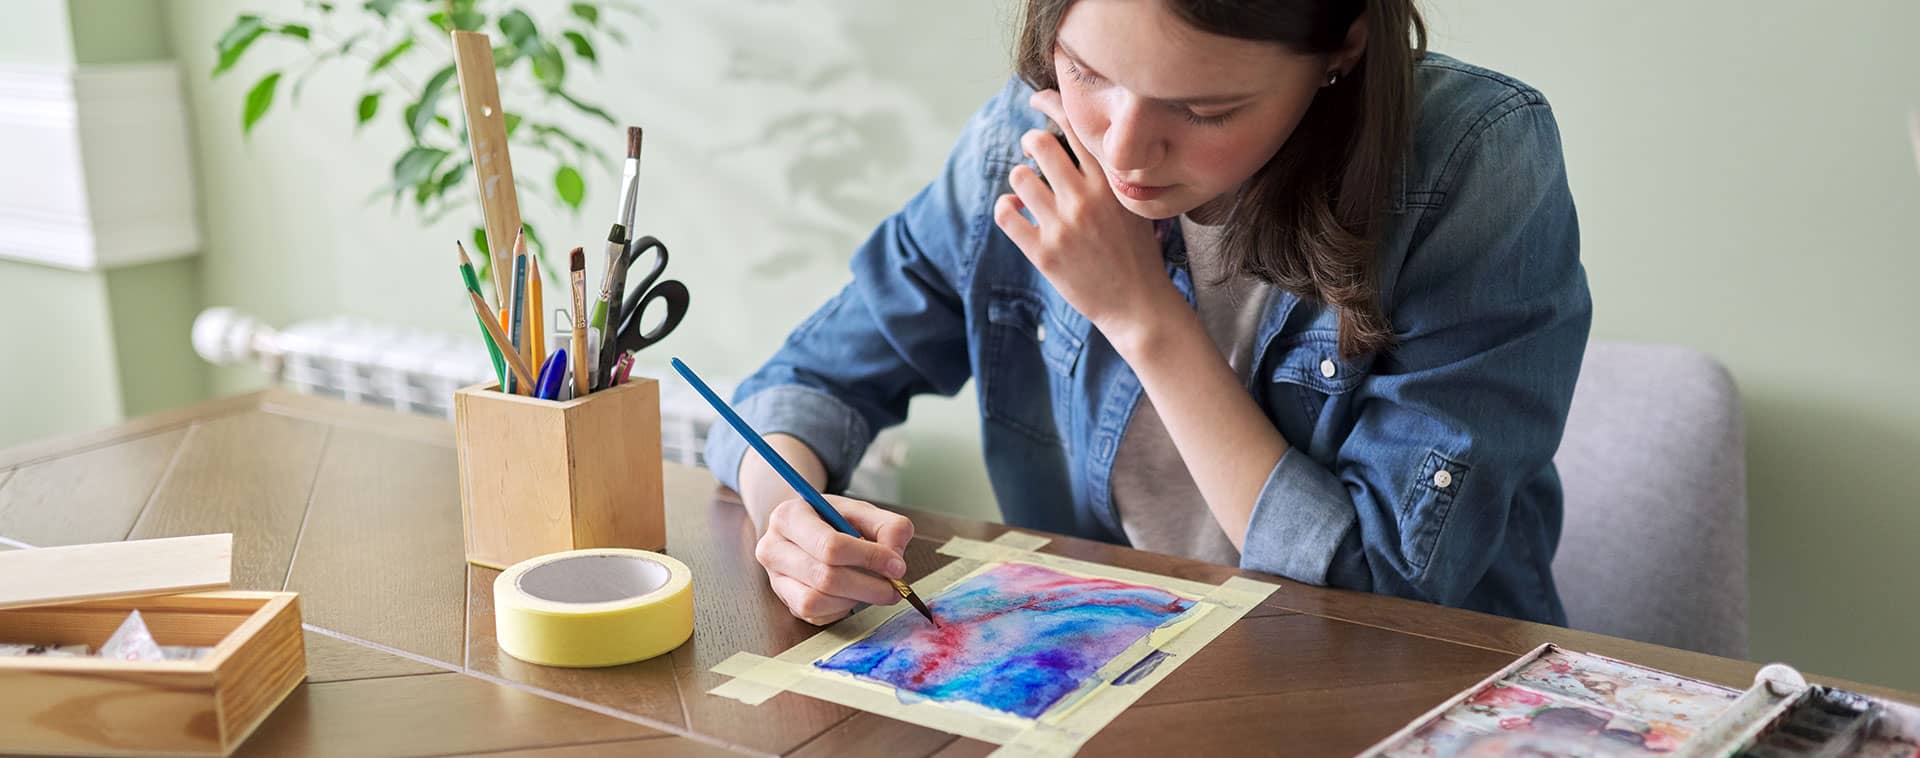 Five Ways Art Can Enhance Creative Thinking in Kids